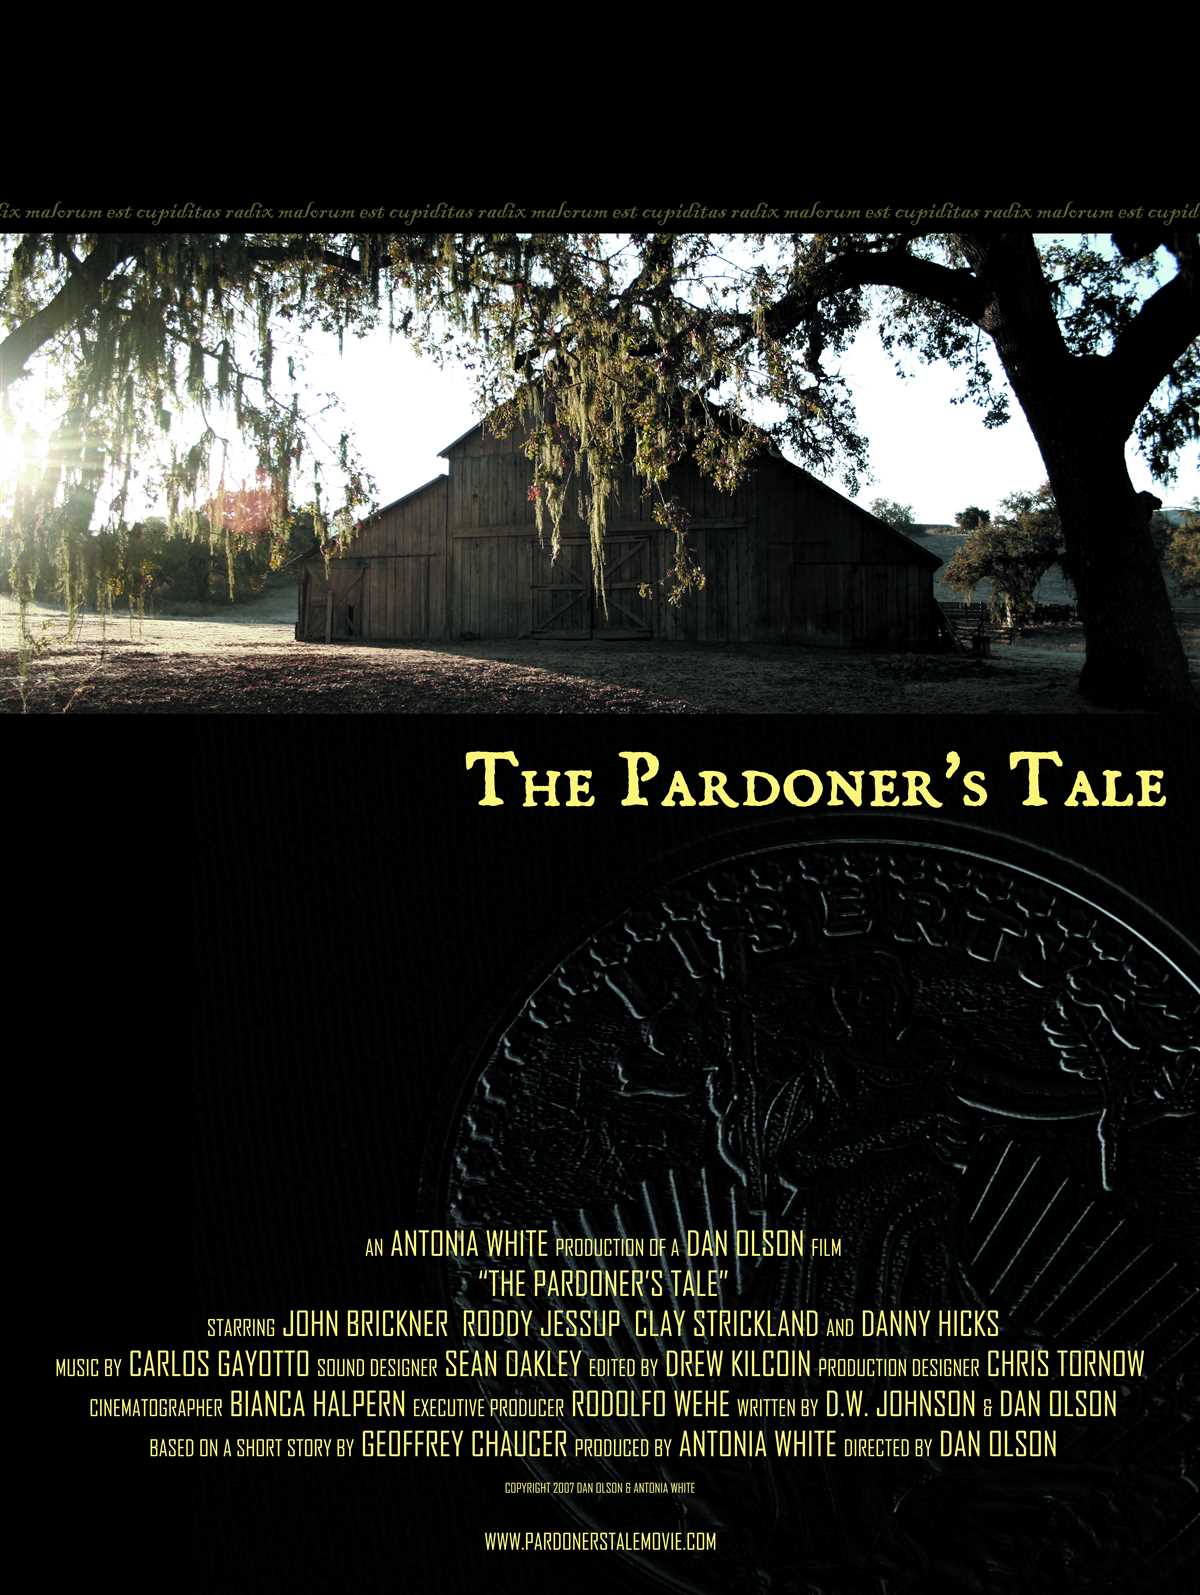 The pardoner's tale answers